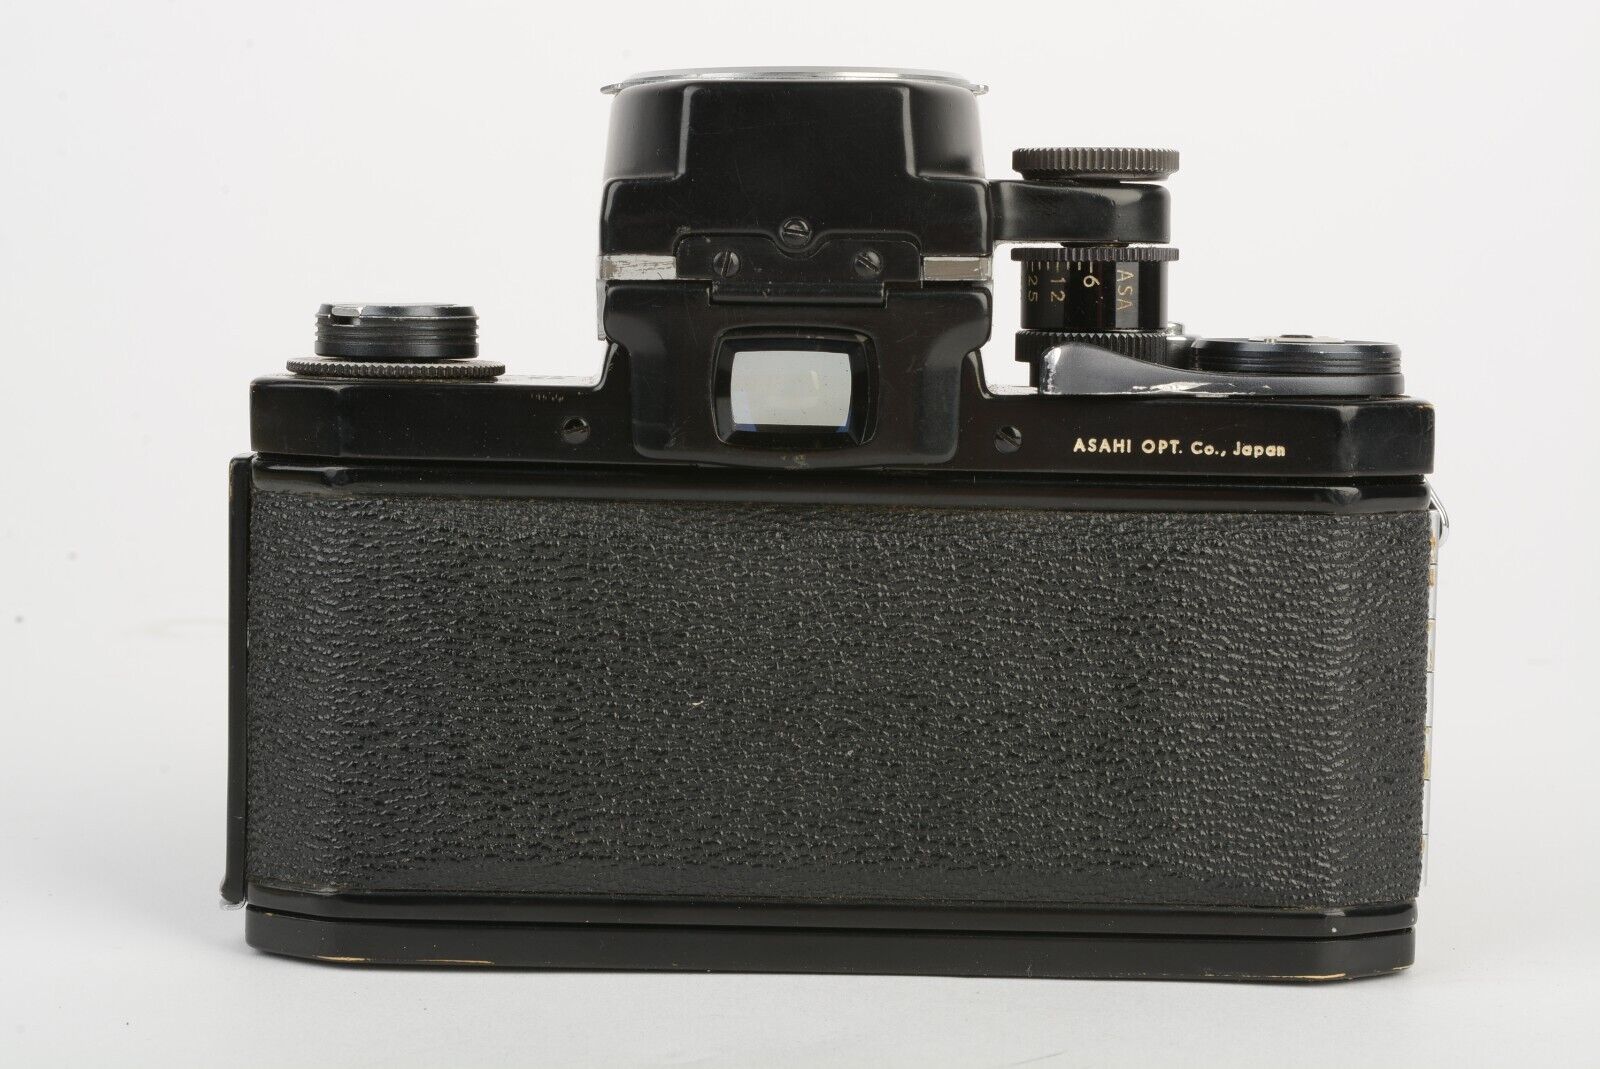 Pentax S3 Black 35mm SLR w/55mm Super Takumar f1.8 lens, meter, book, nice!